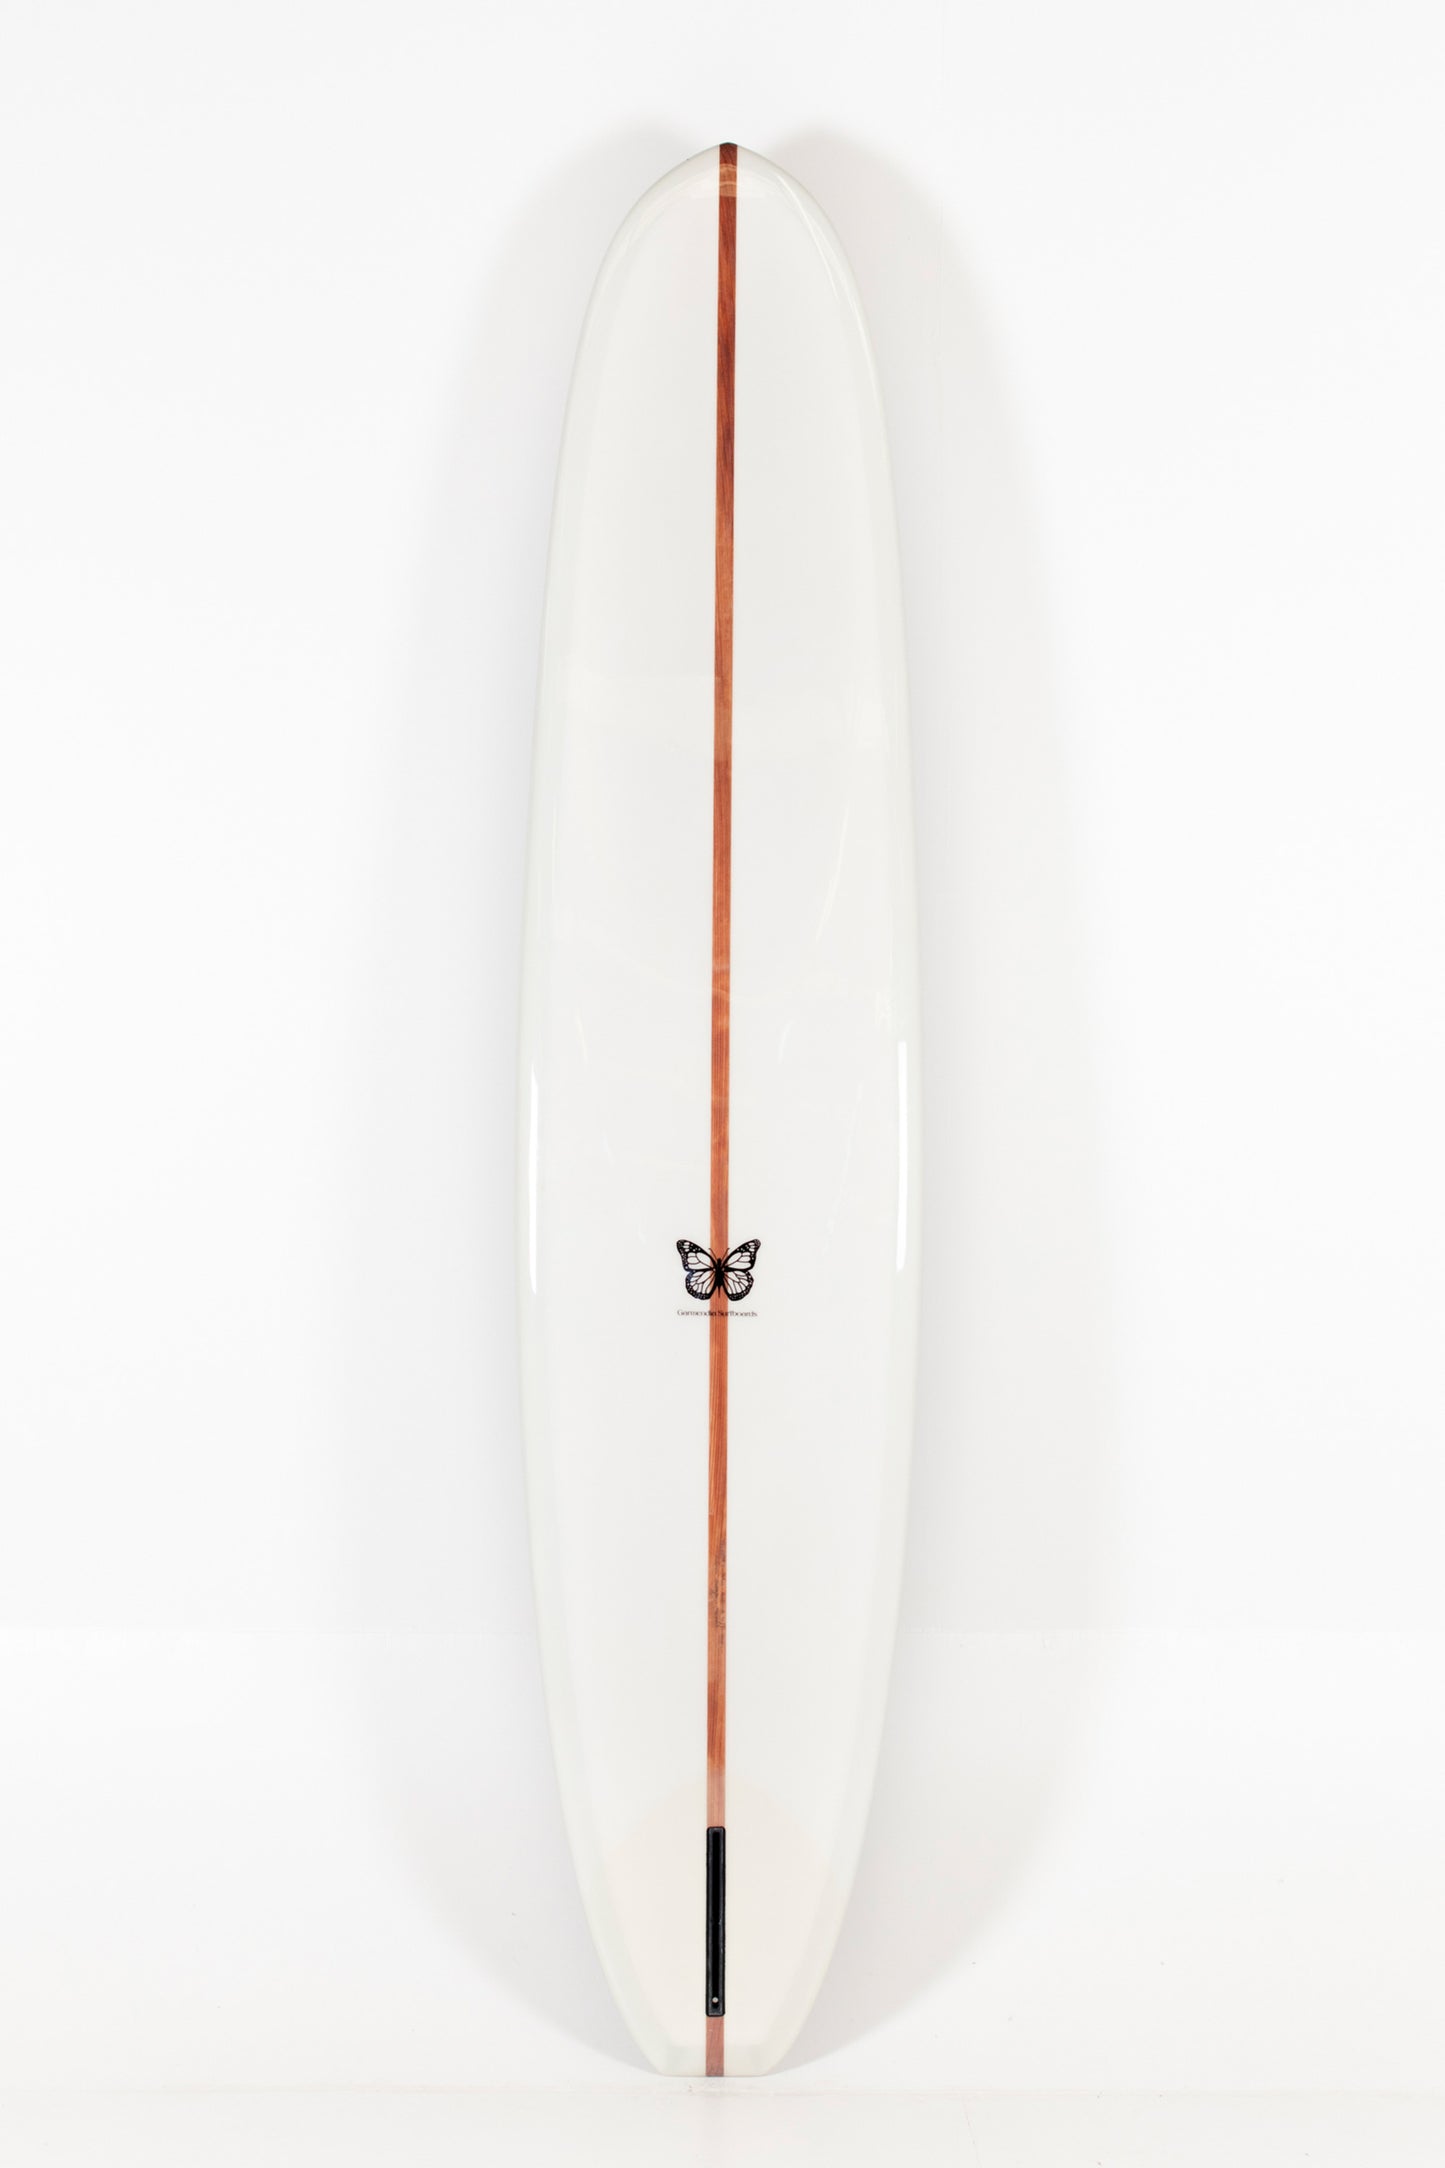 Pukas Surf Shop - Garmendia Surfboards - BULLET - 9’2” x 22 7/8 x 3